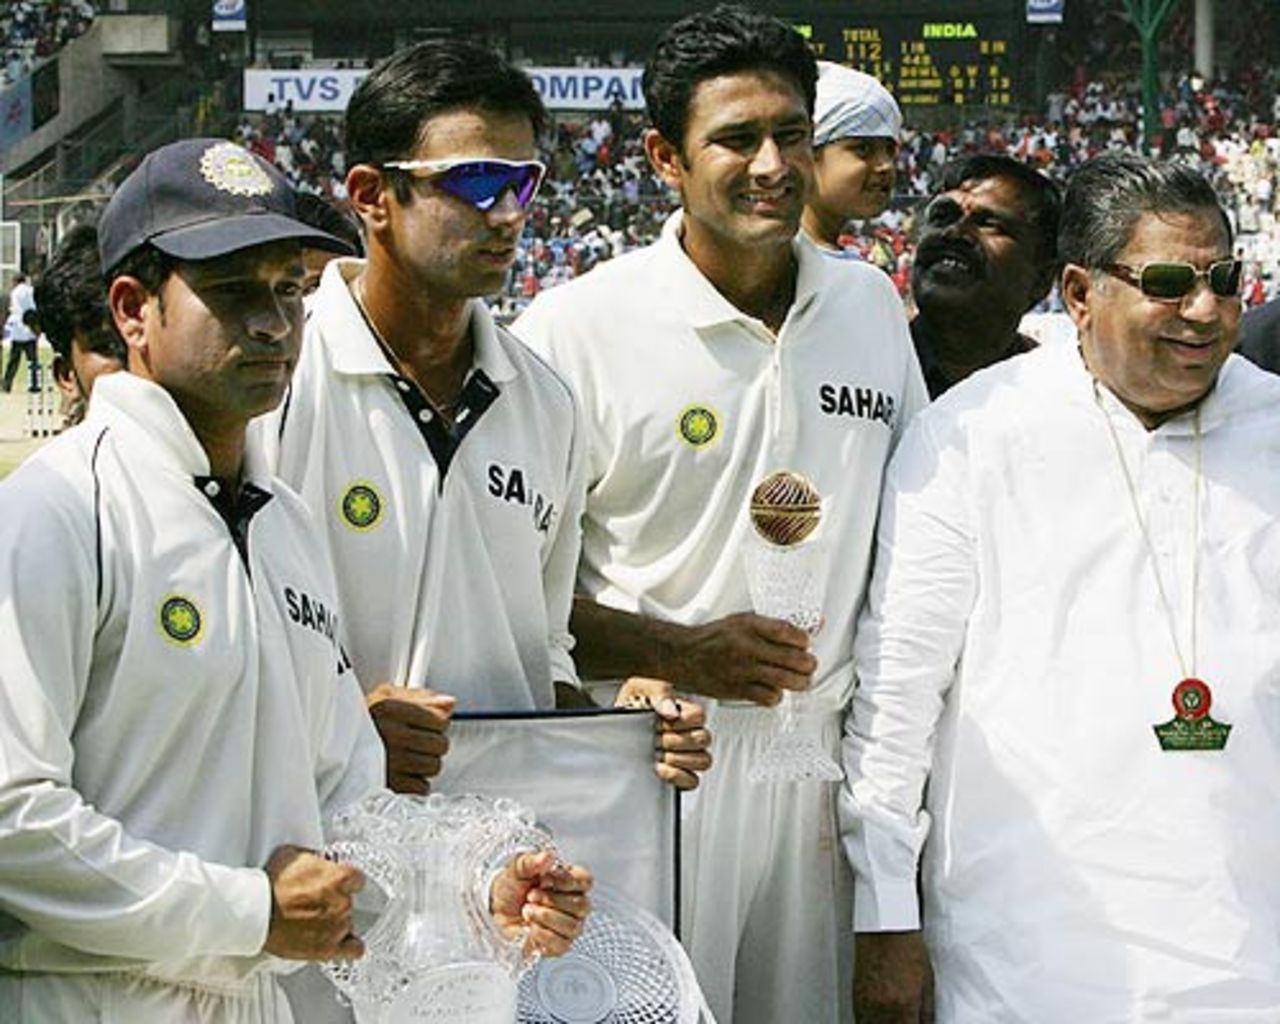 Sachin Tendulkar, Rahul dravid and Anil Kumble were honoured for their individual milestones by Dharam Singh, the Karnataka chief minister, India v Pakistan, 3rd Test, Bangalore, 4th day, March 27, 2005